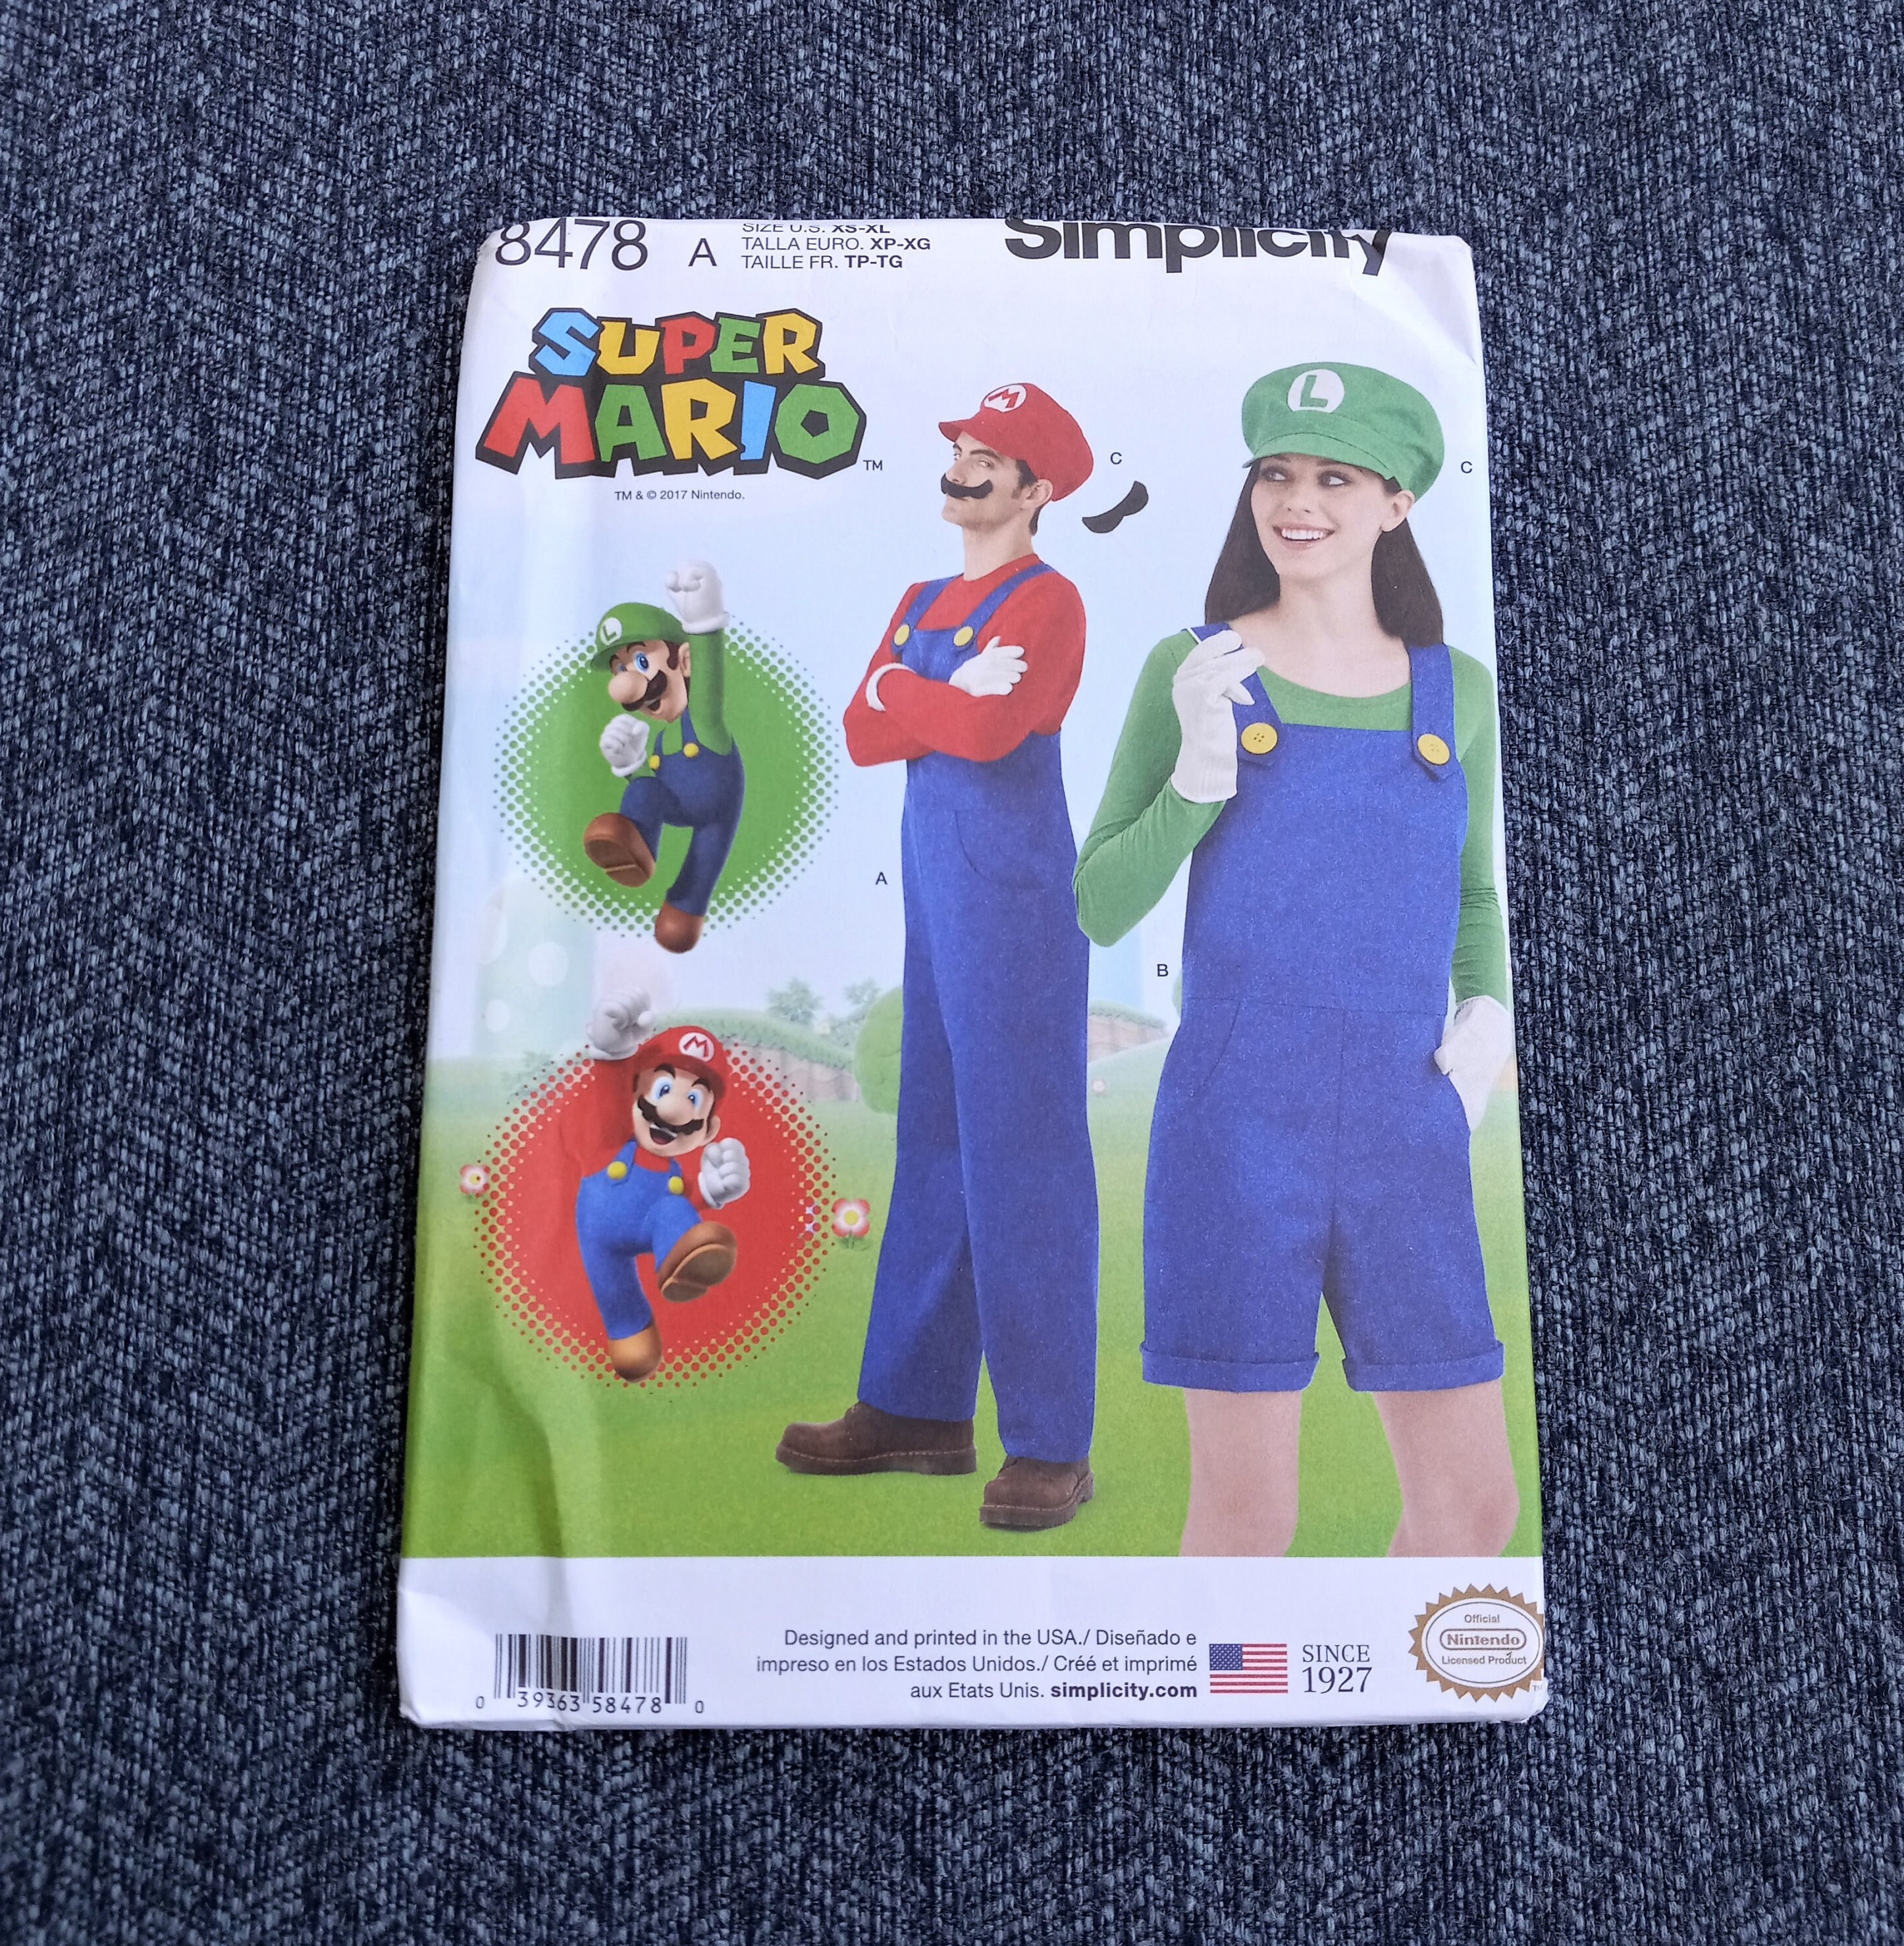 Top 10 Coolest Super Mario Dress Up Ideas! - Oya Costumes